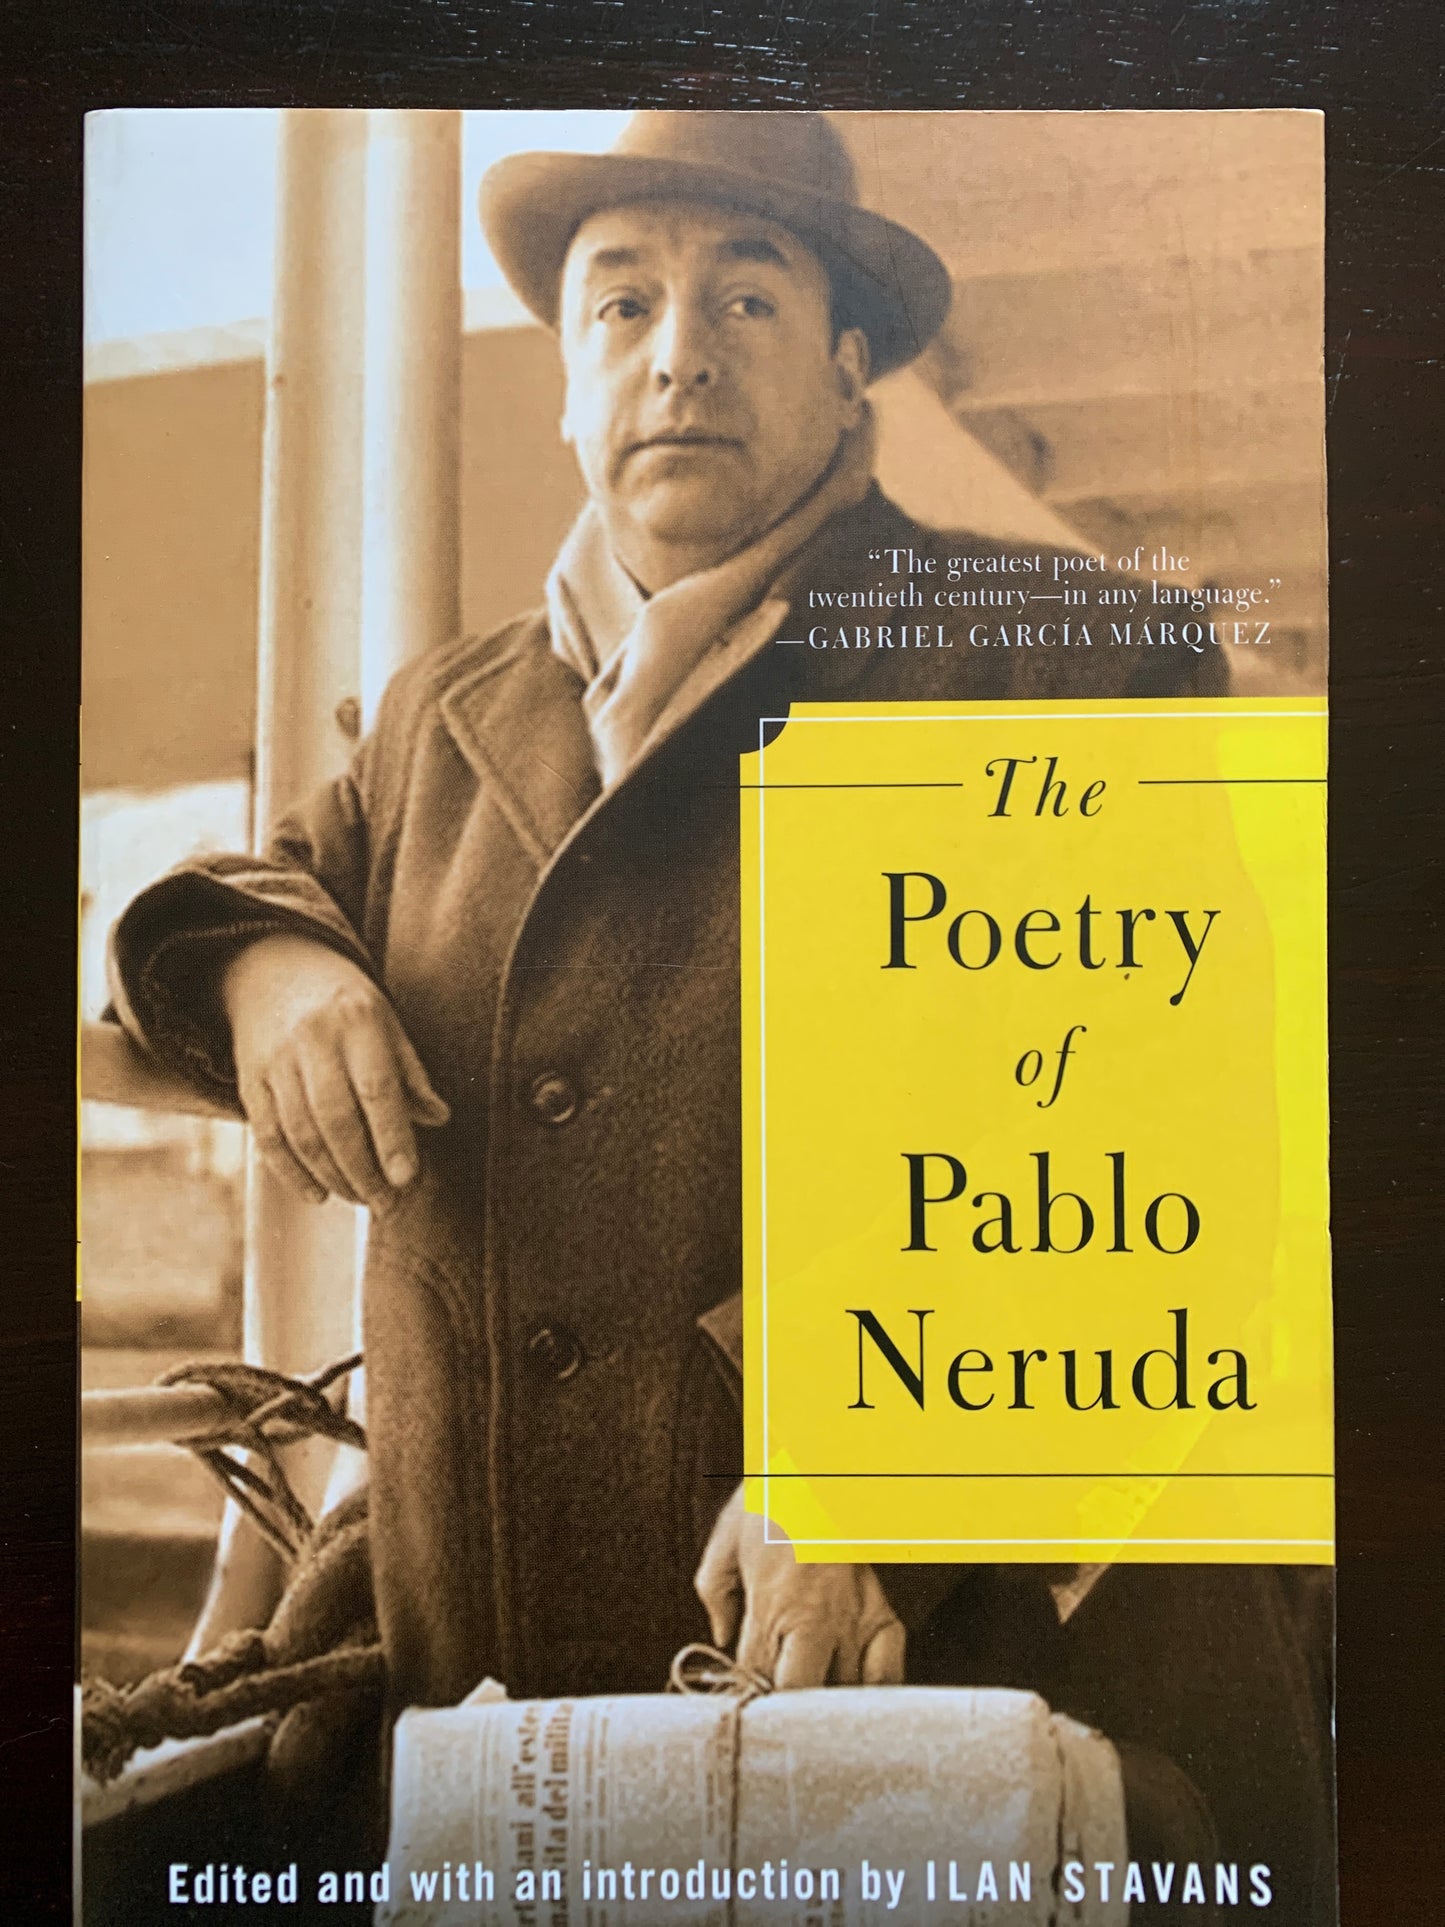 The Poetry of Pablo Neruda